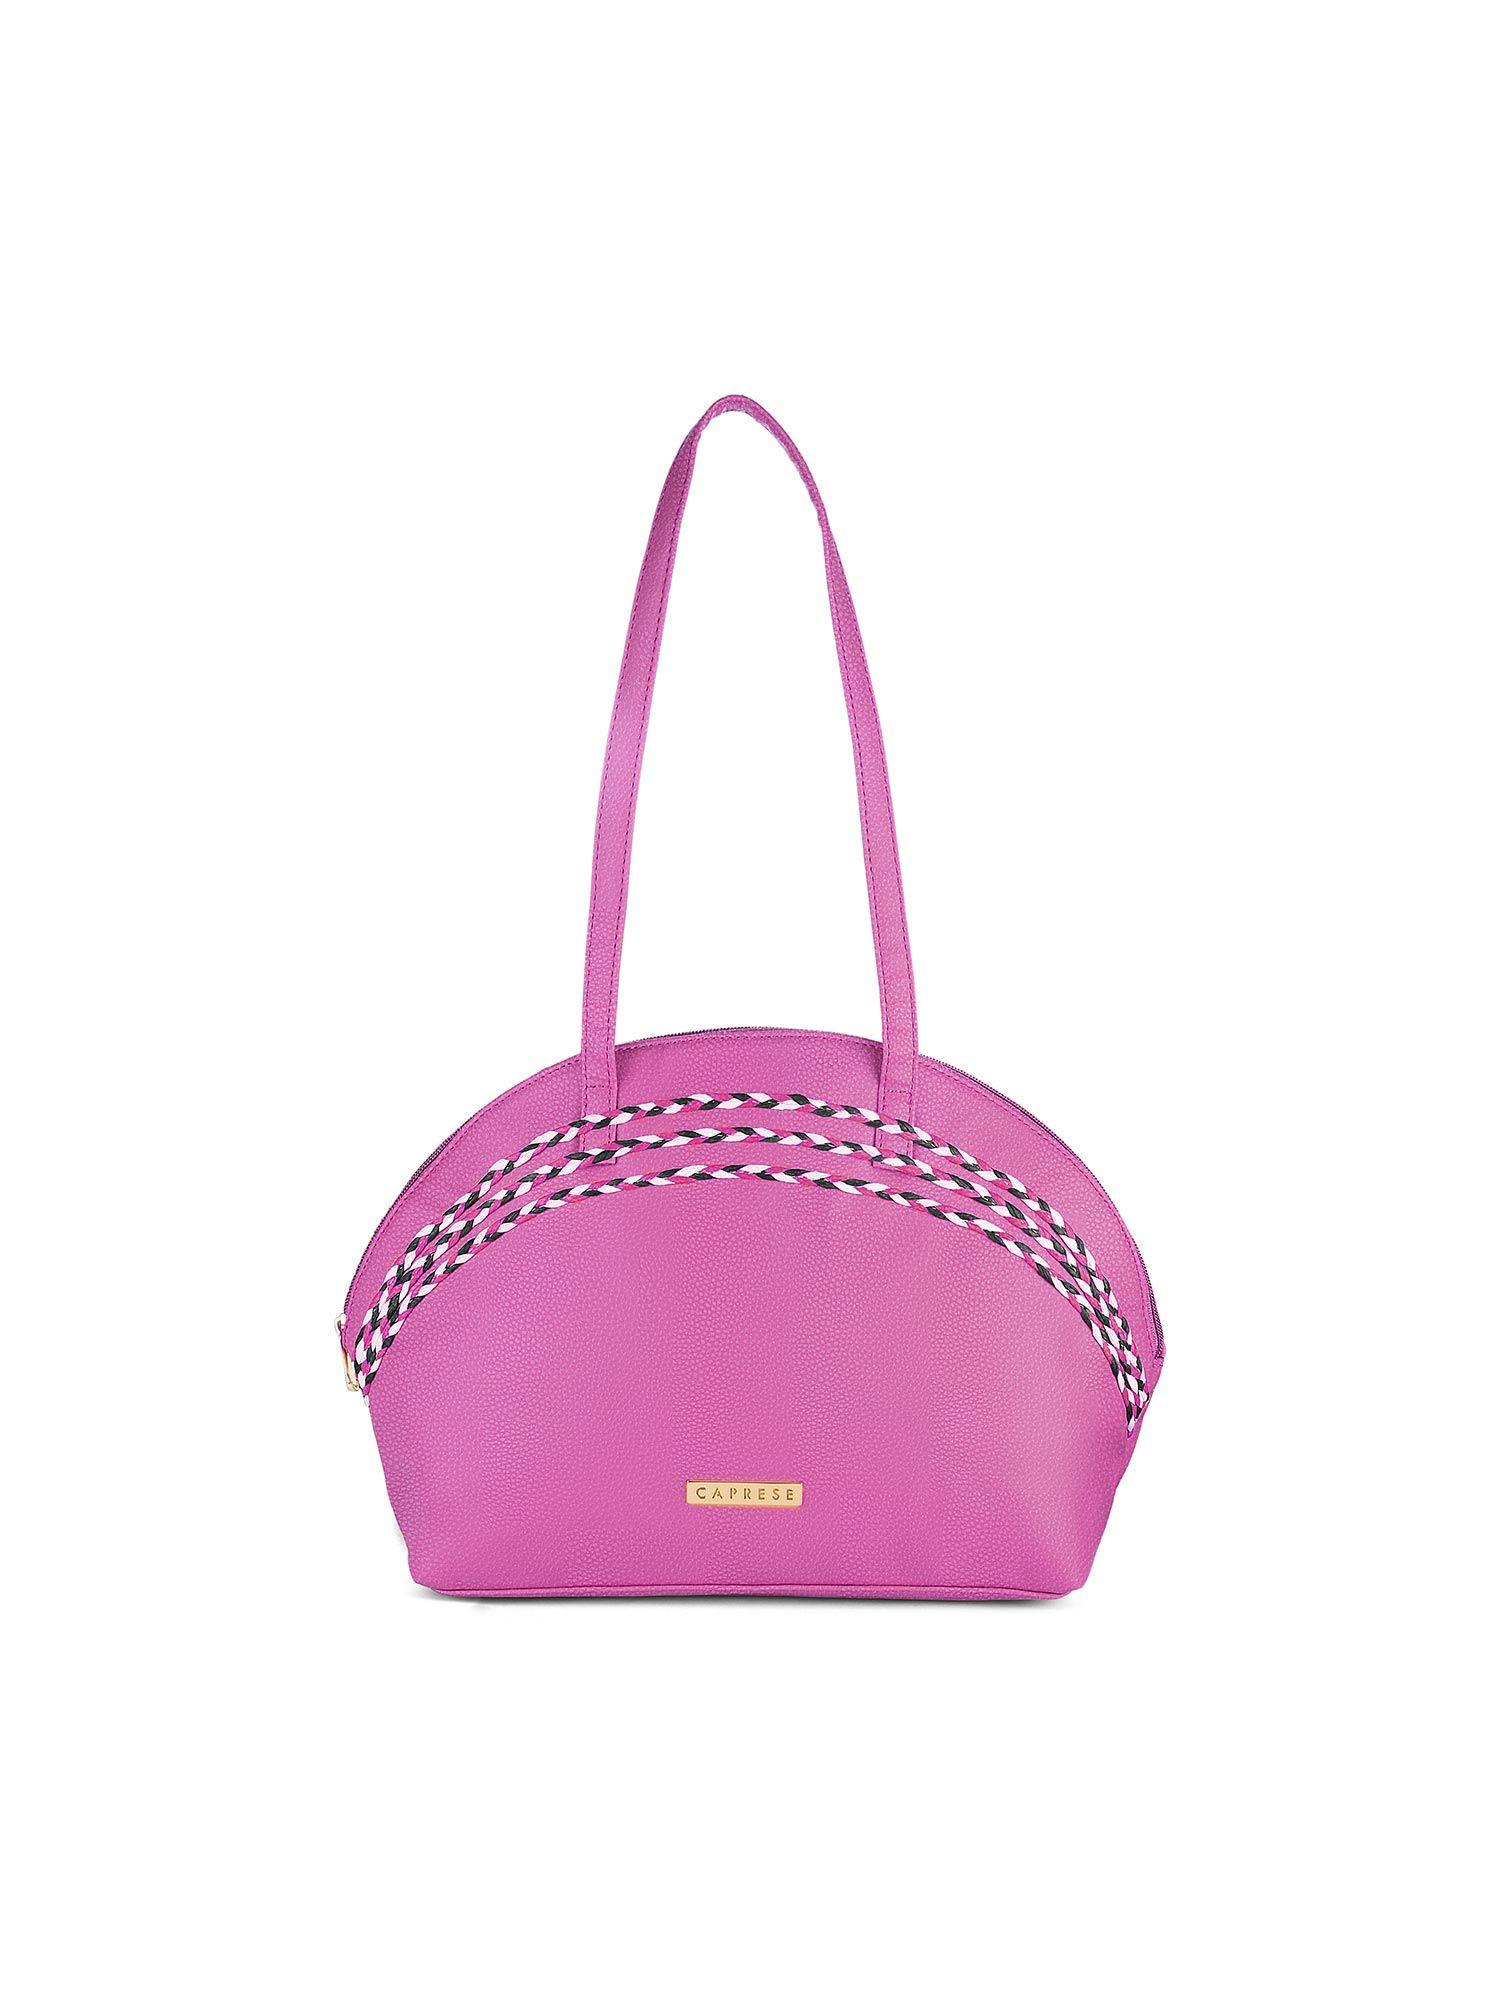 medium pink casual satchel handbag